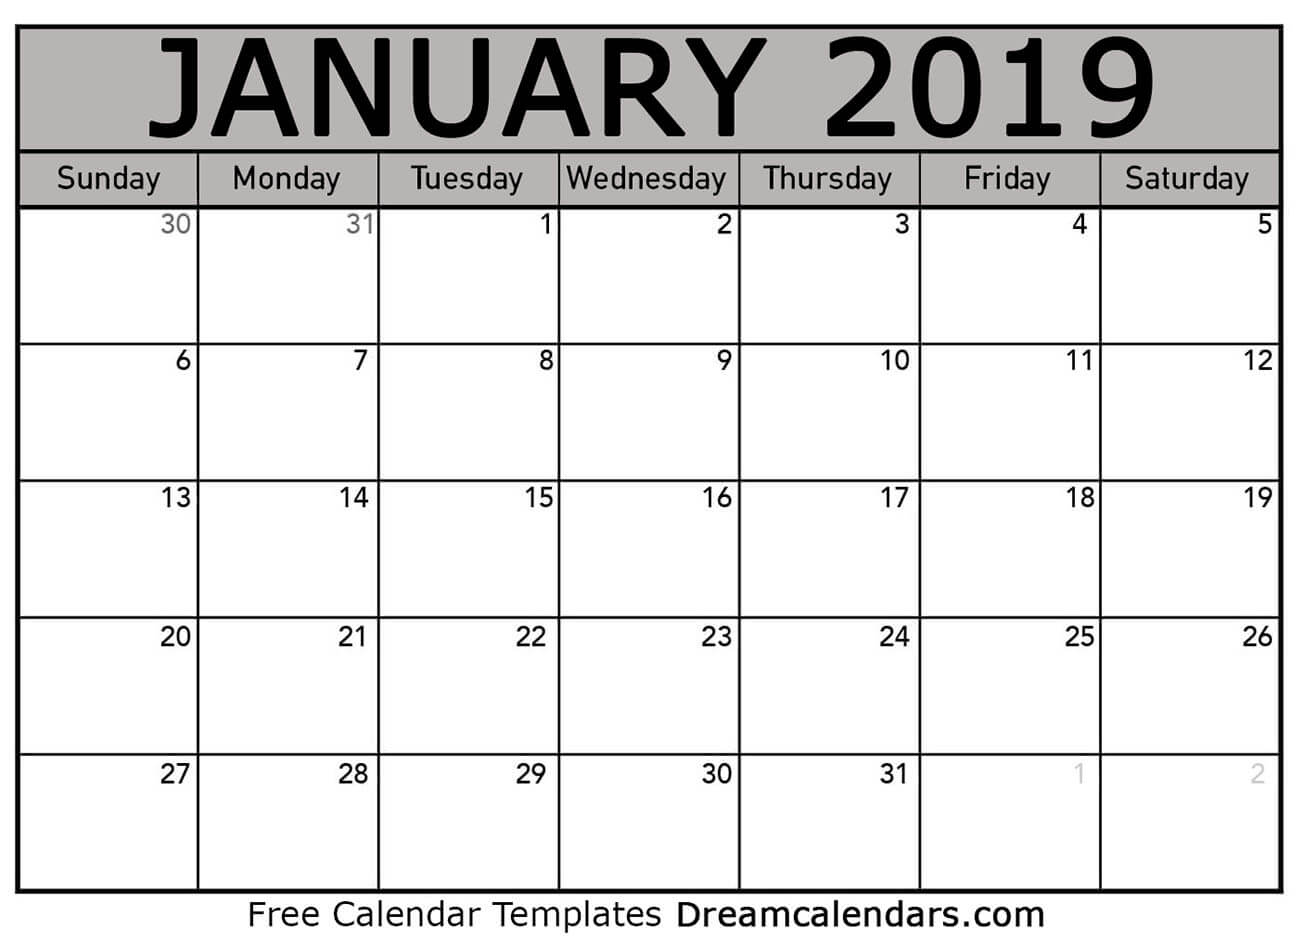 Printable January 2019 Calendar Templates | by Helena Orstem | Medium